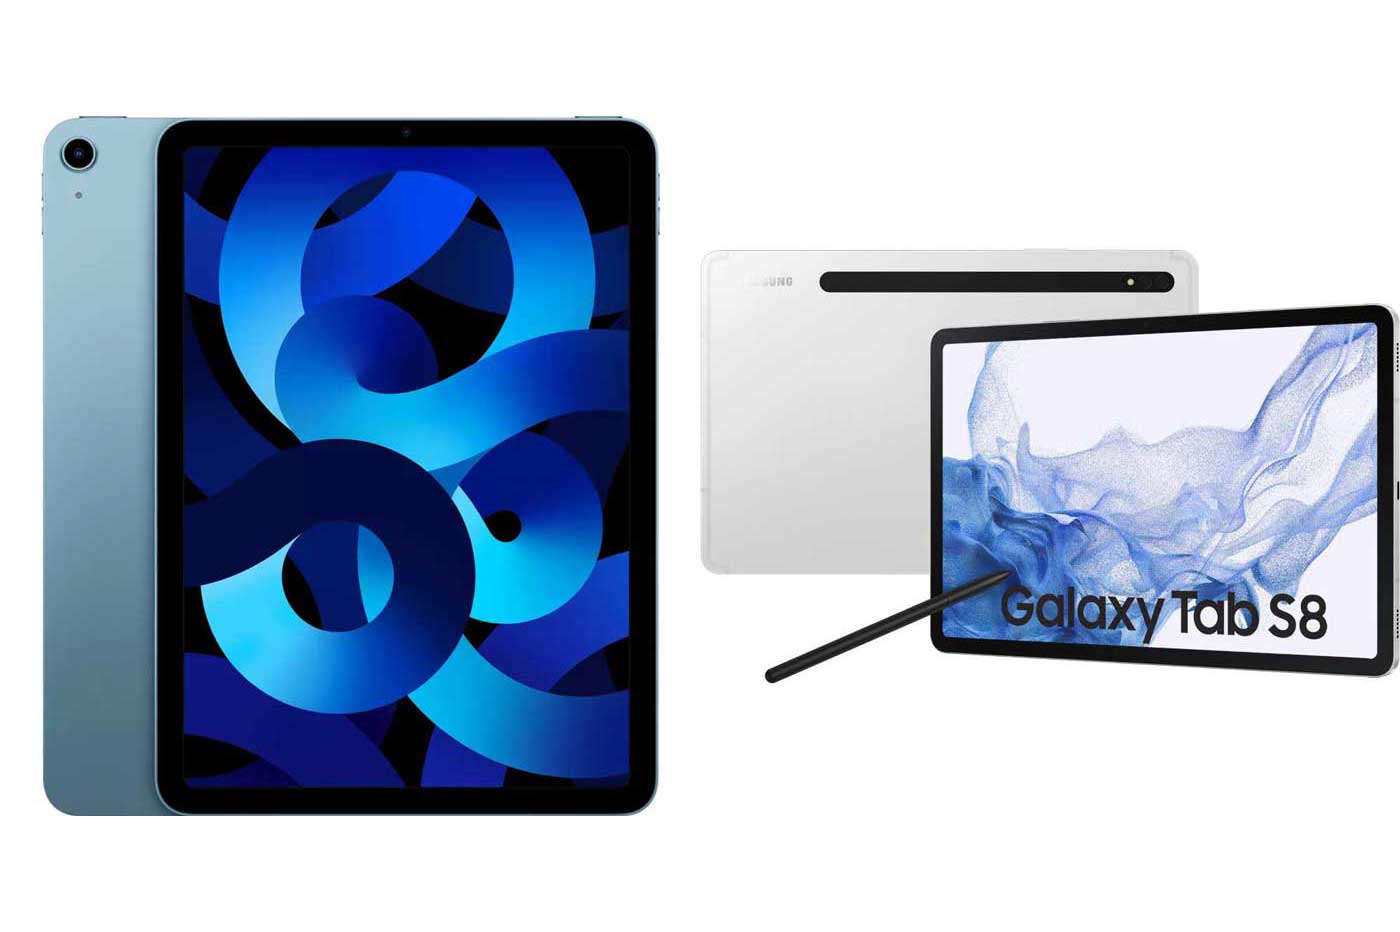 iPad Air 5 vs Galaxy Tab S8